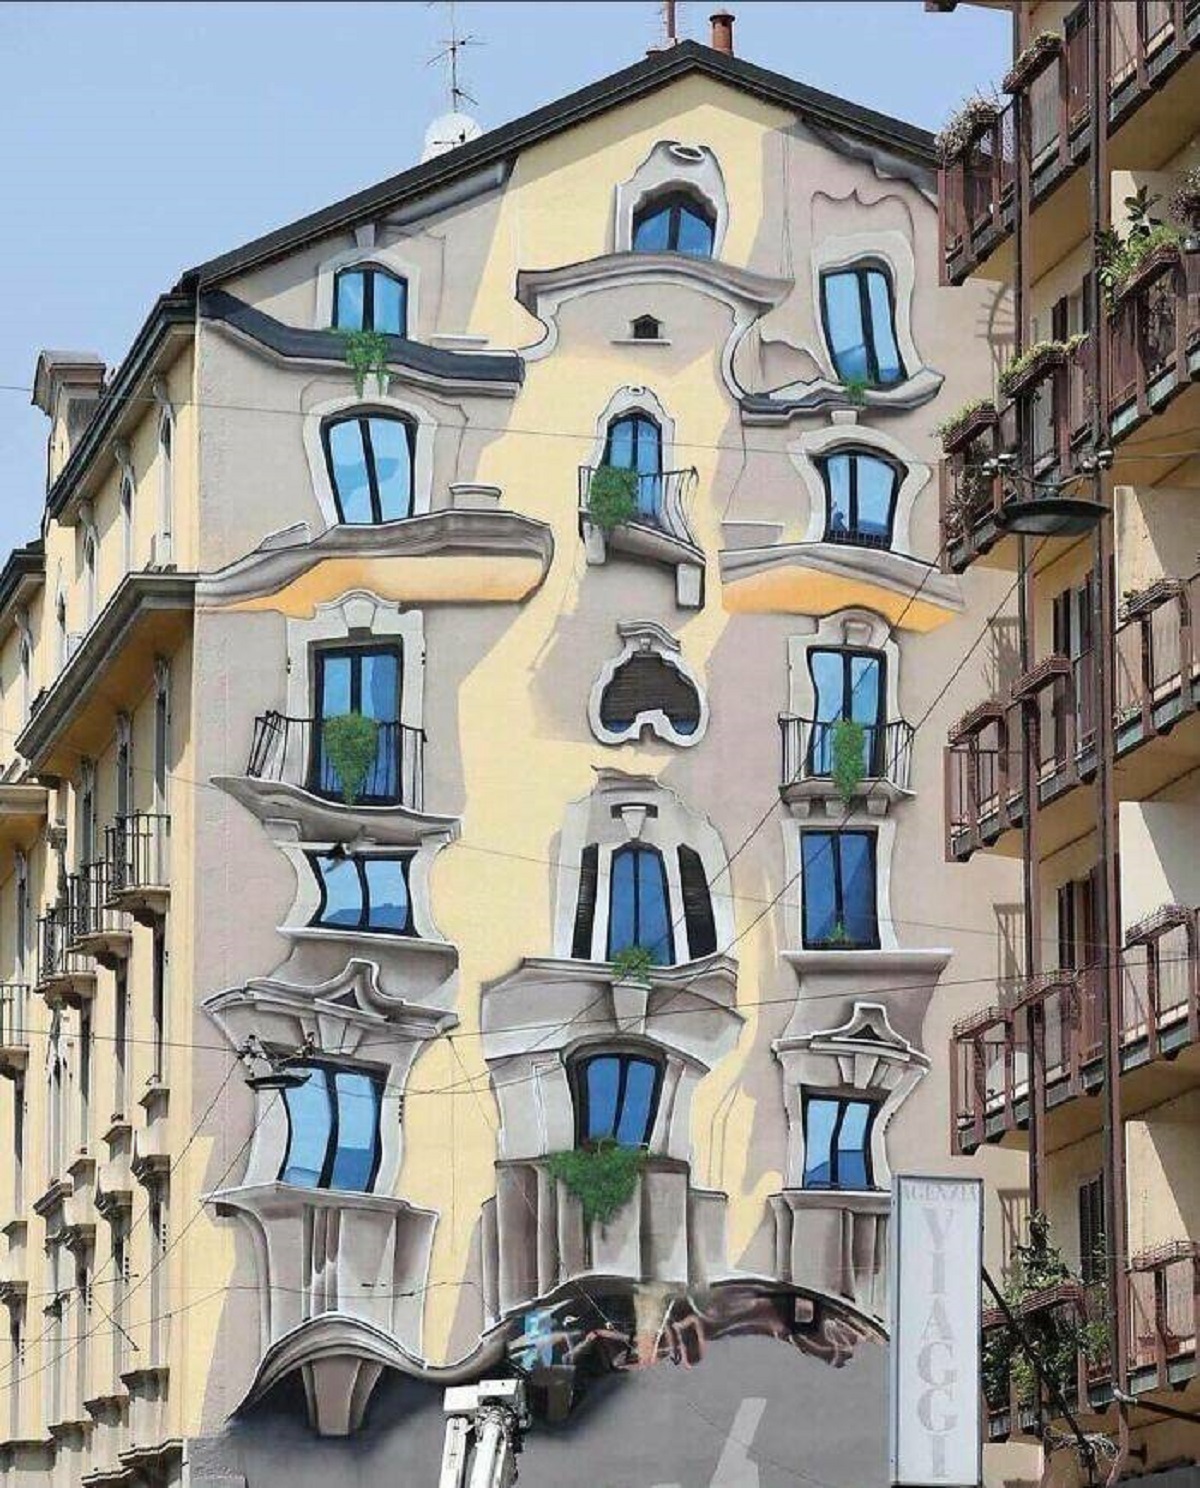 "Street Art In Italy"